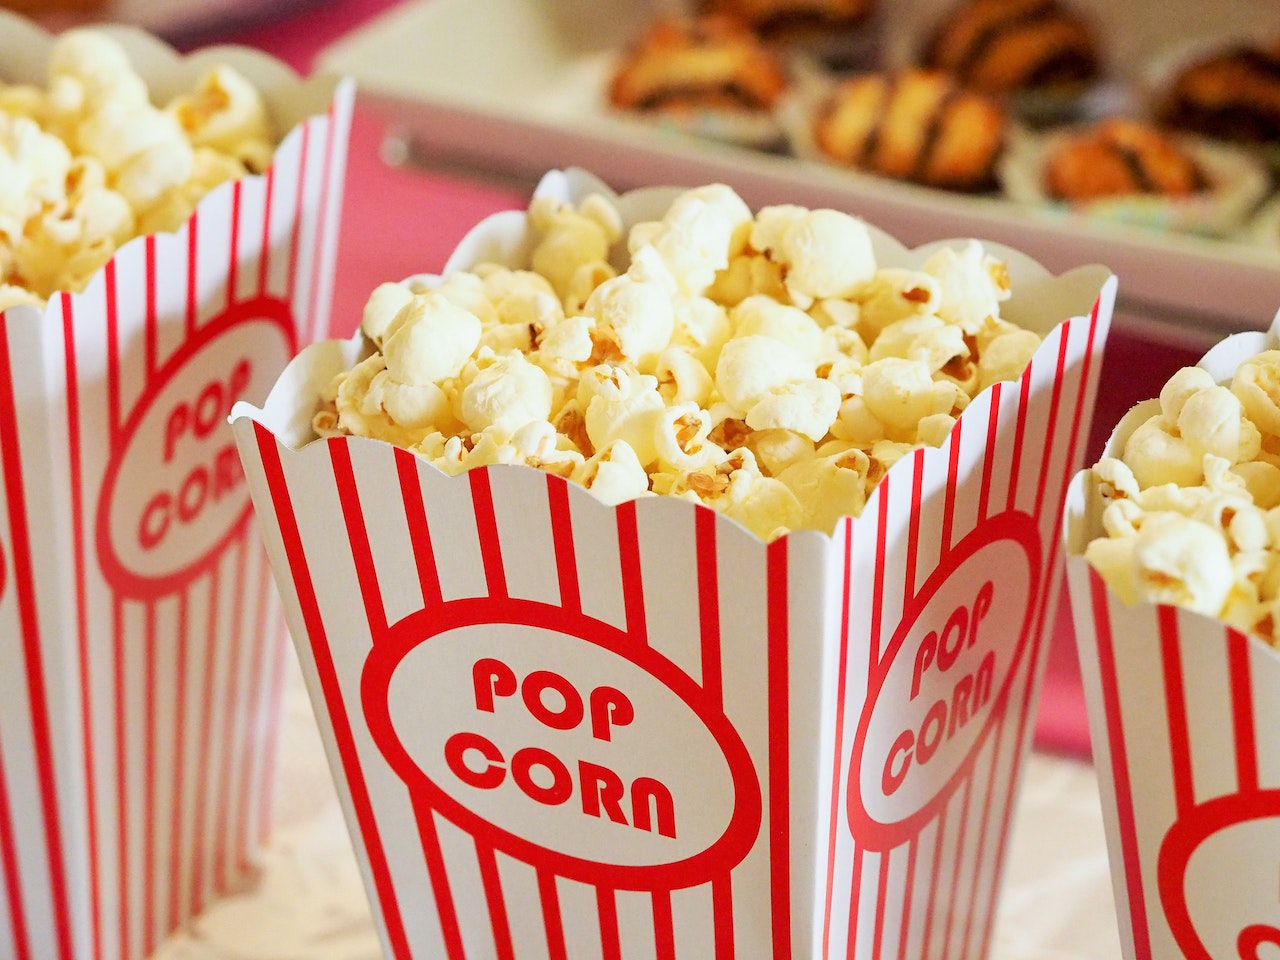 To popcorn είναι ένα πολύ αγαπημένο σνακ, είναι όμως υγιεινό; Δες τι πρέπει να προσέχεις